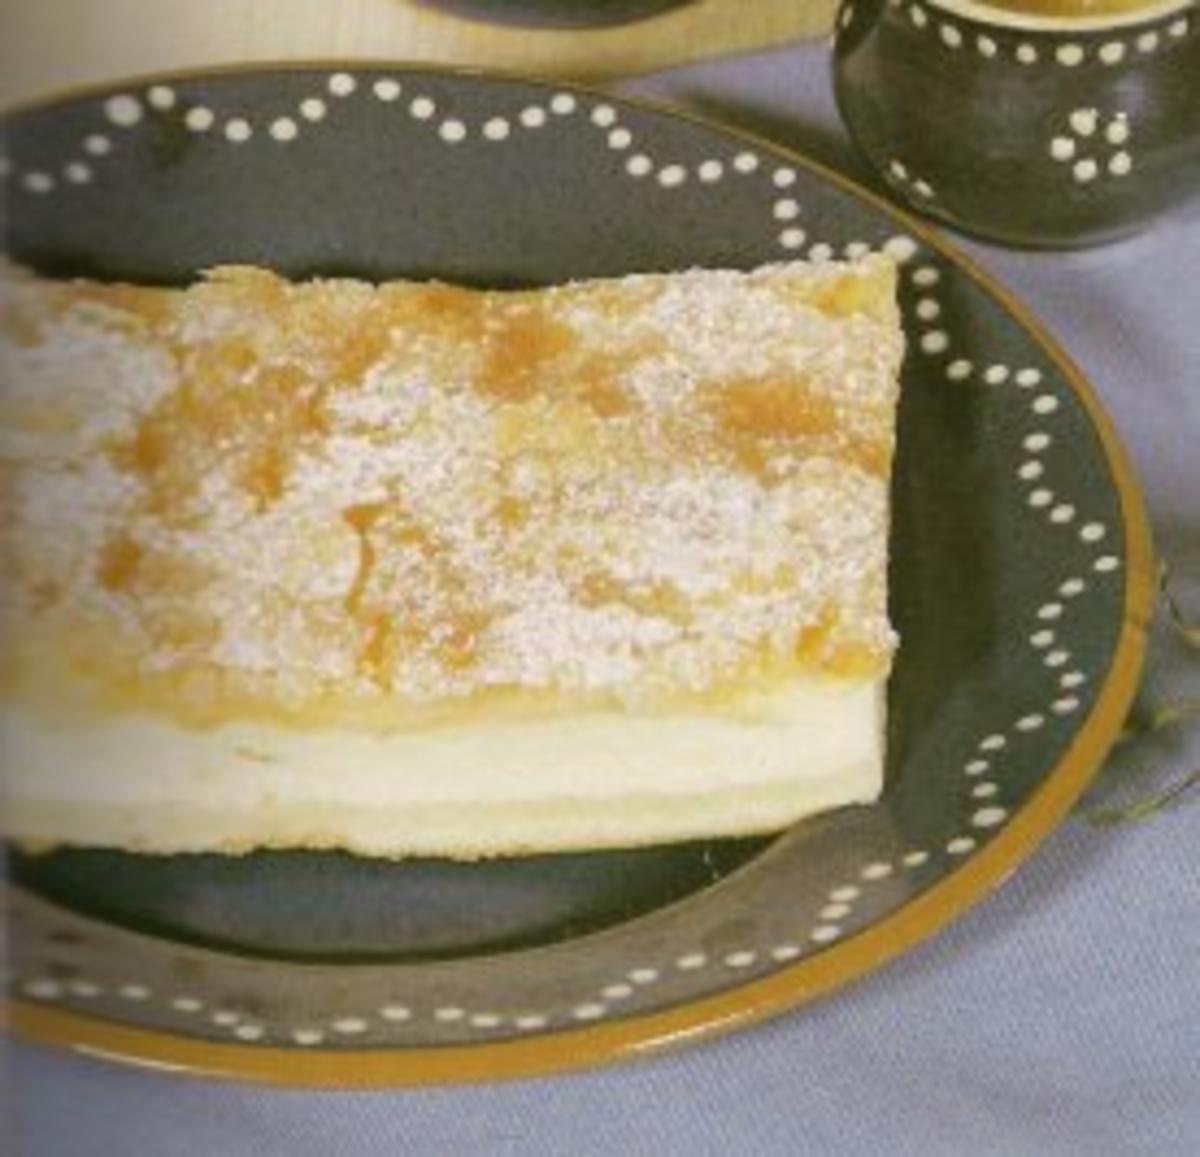 Kirmeskuchen Blechkuchen mit Quark und Pudding - Rezept mit Bild